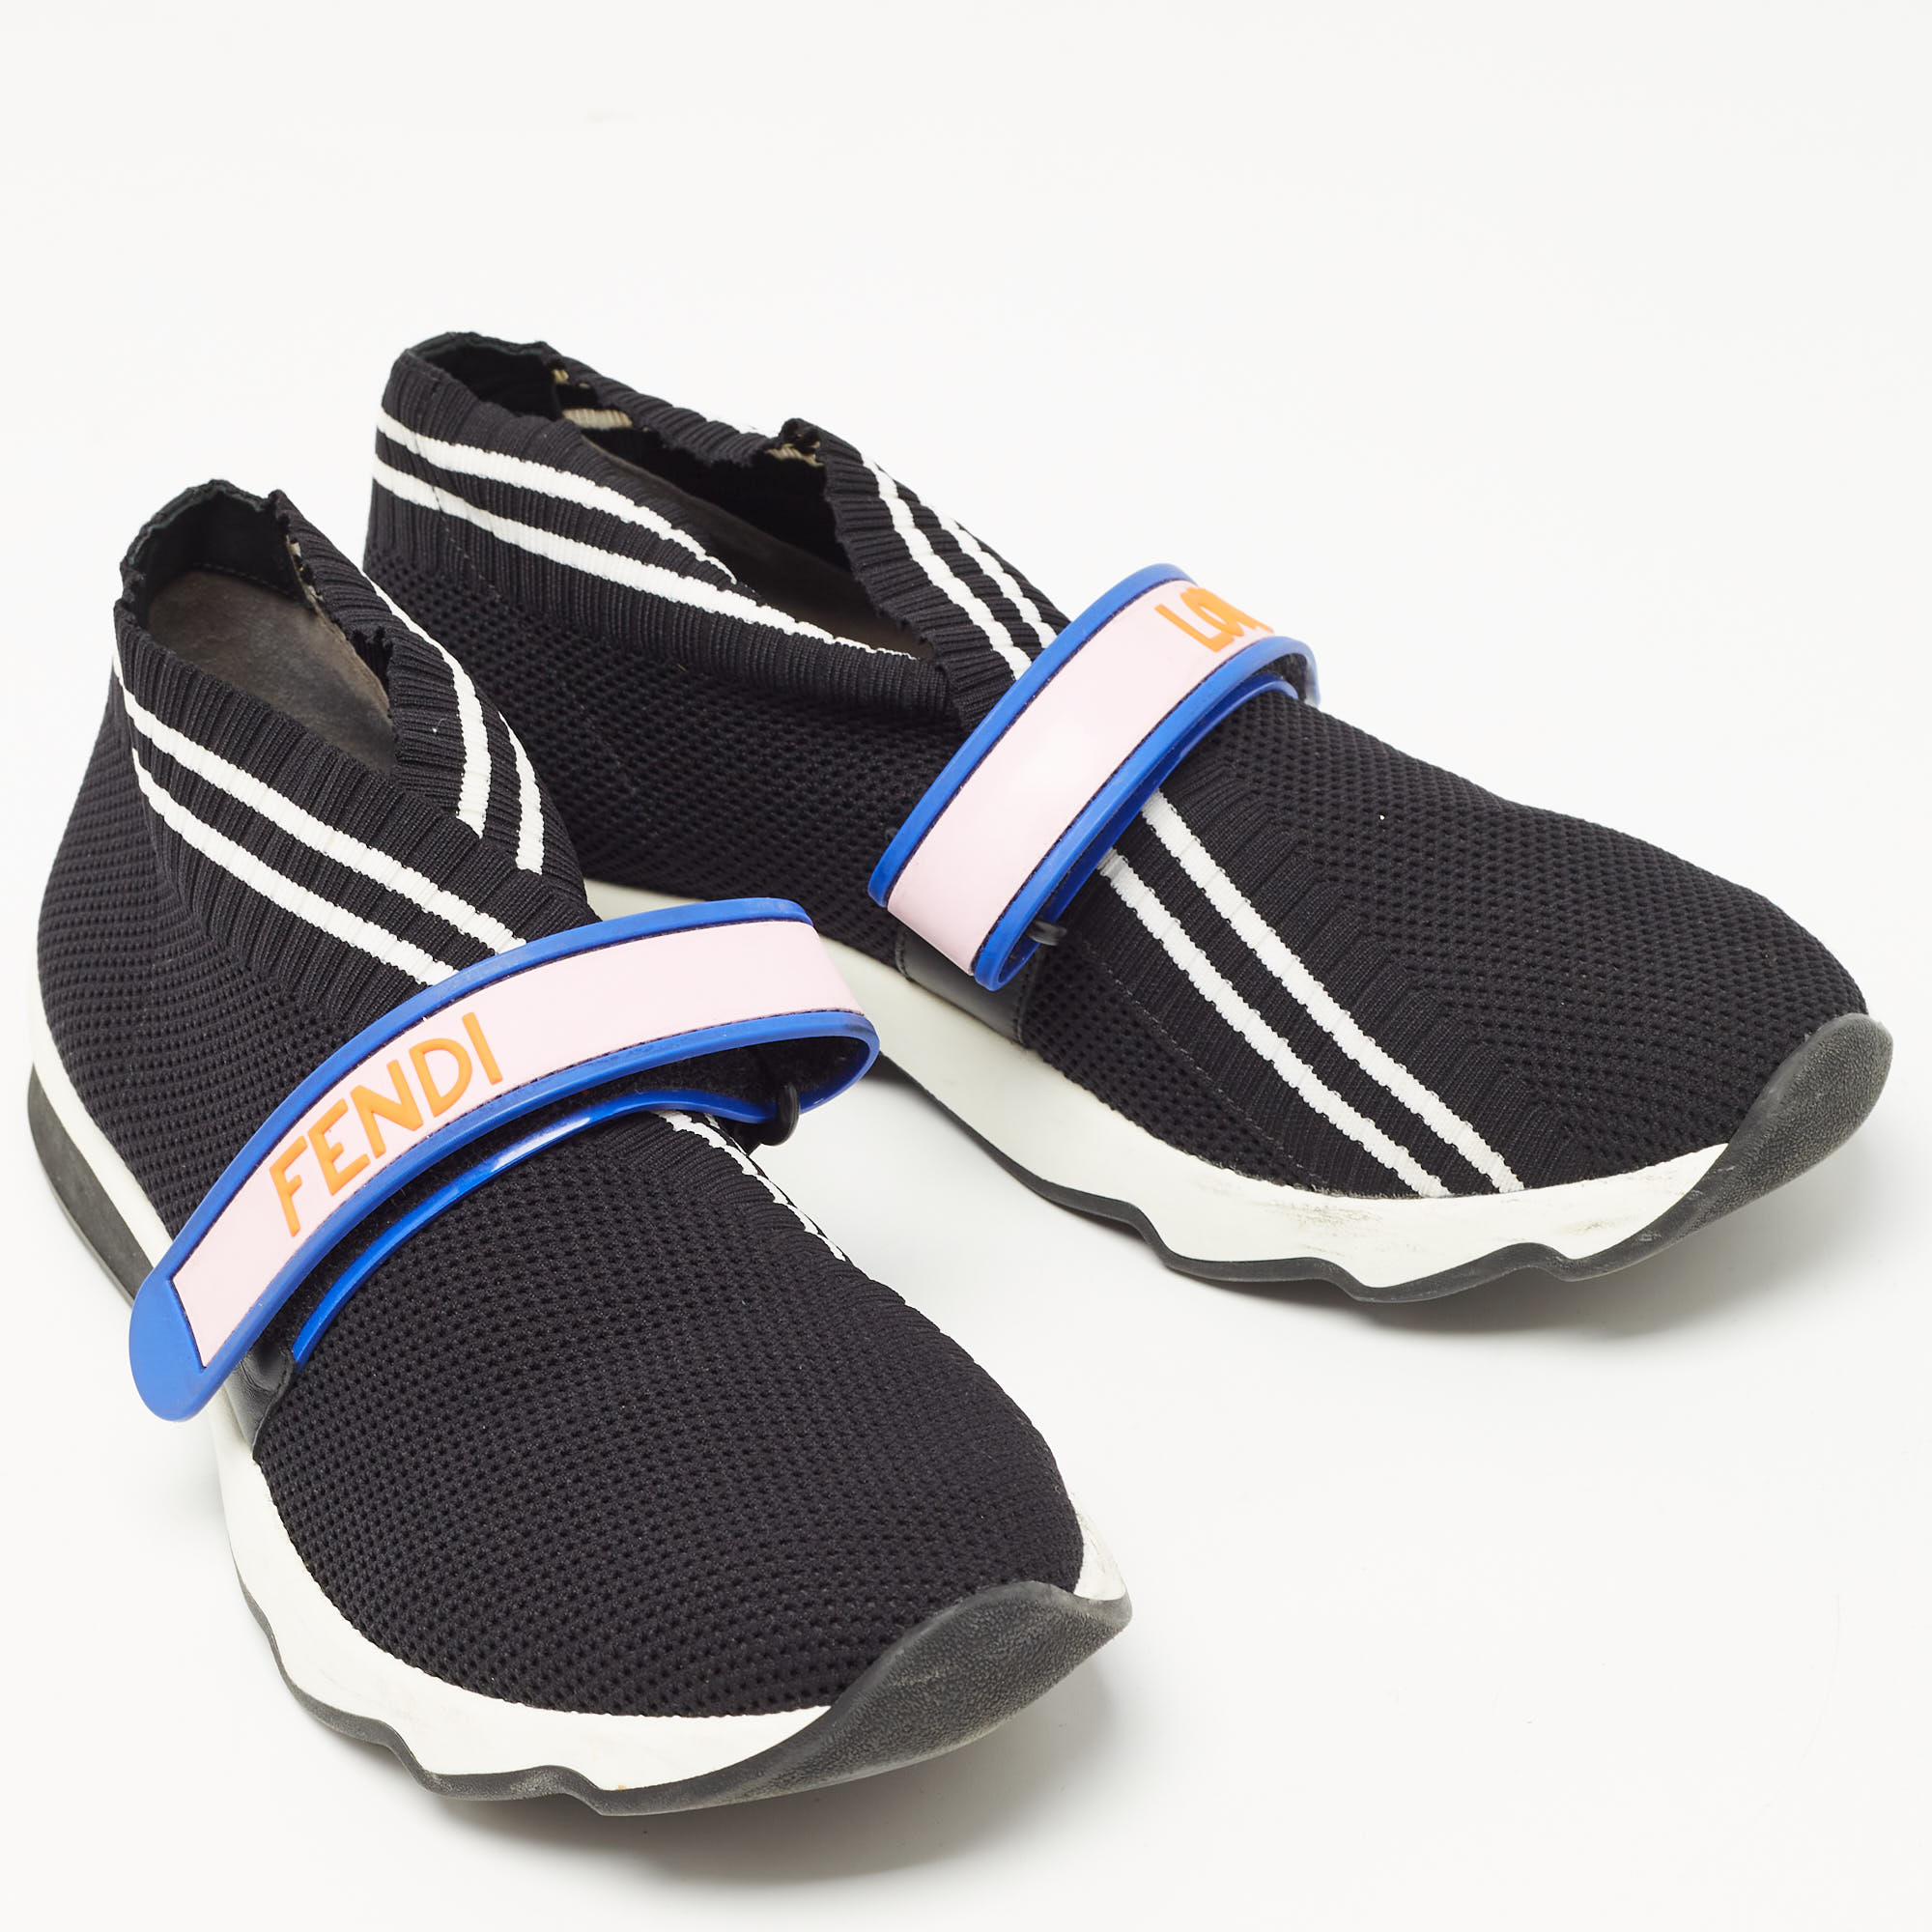 Fendi Black Knit Fabric Rockoko Mismatch Sneakers Size 41